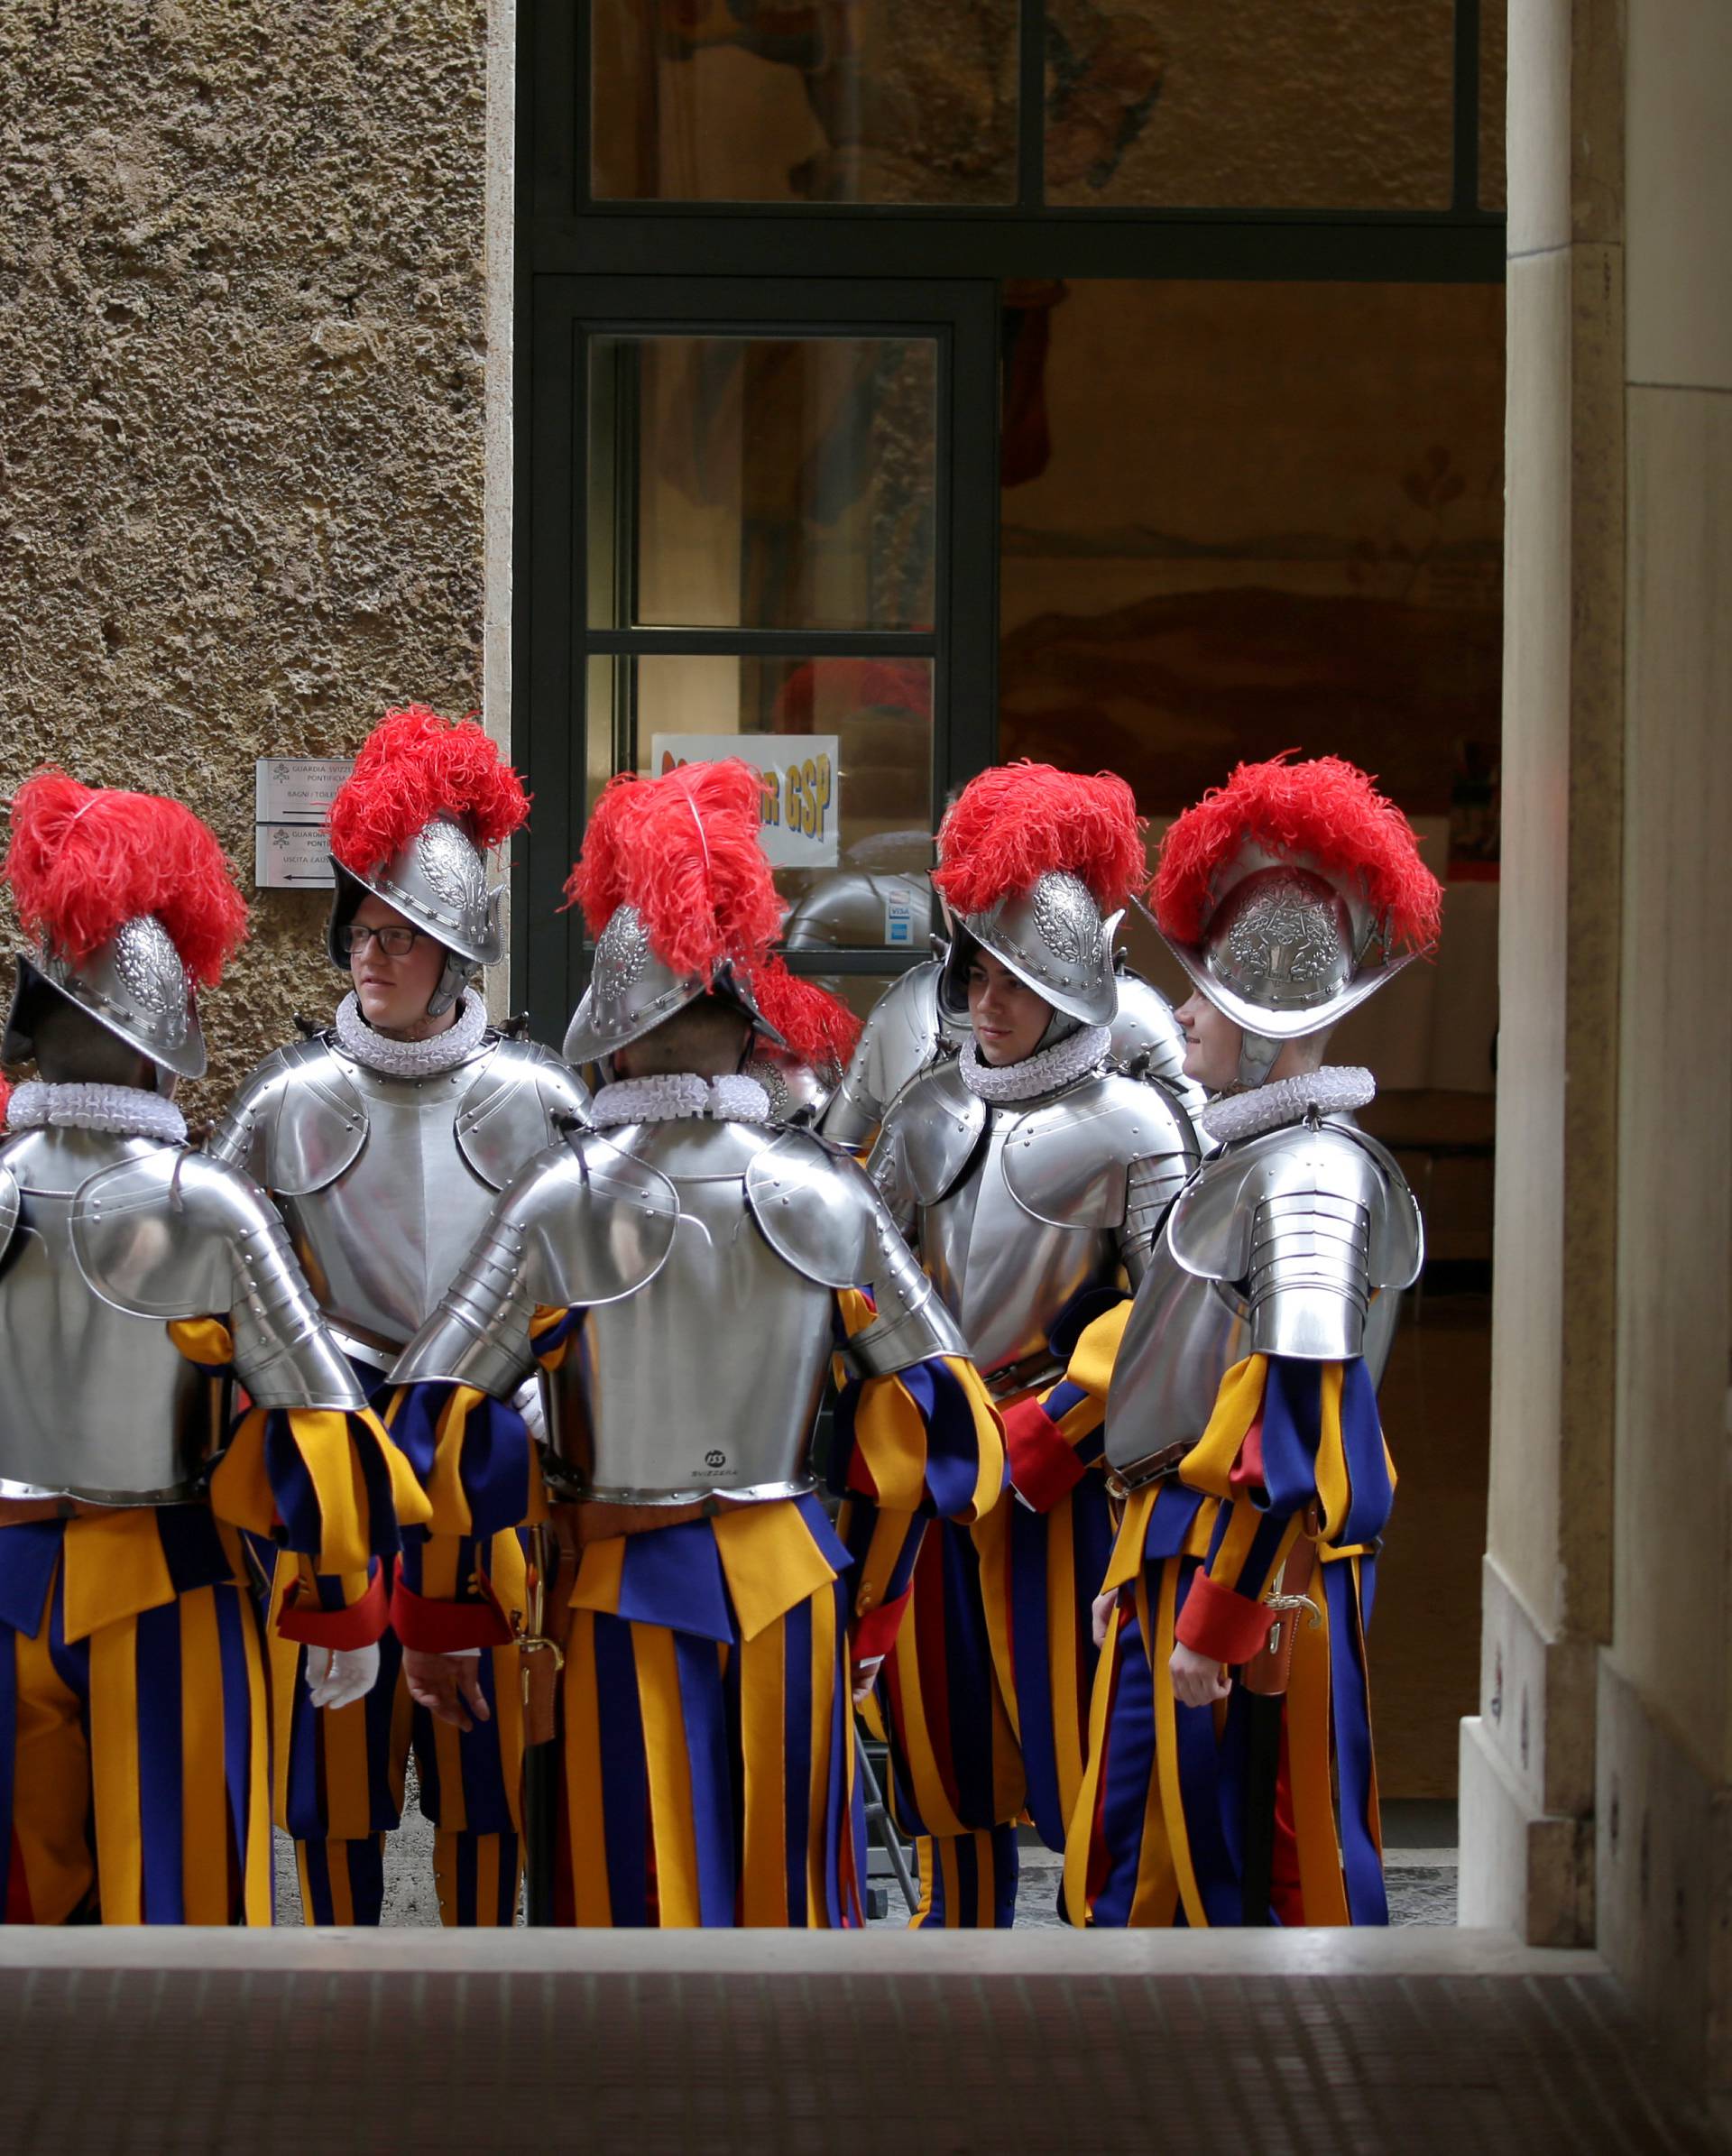 New recruits of the Vaticanâs elite Swiss Guard prepare for the swearing-in ceremony at the Vatican